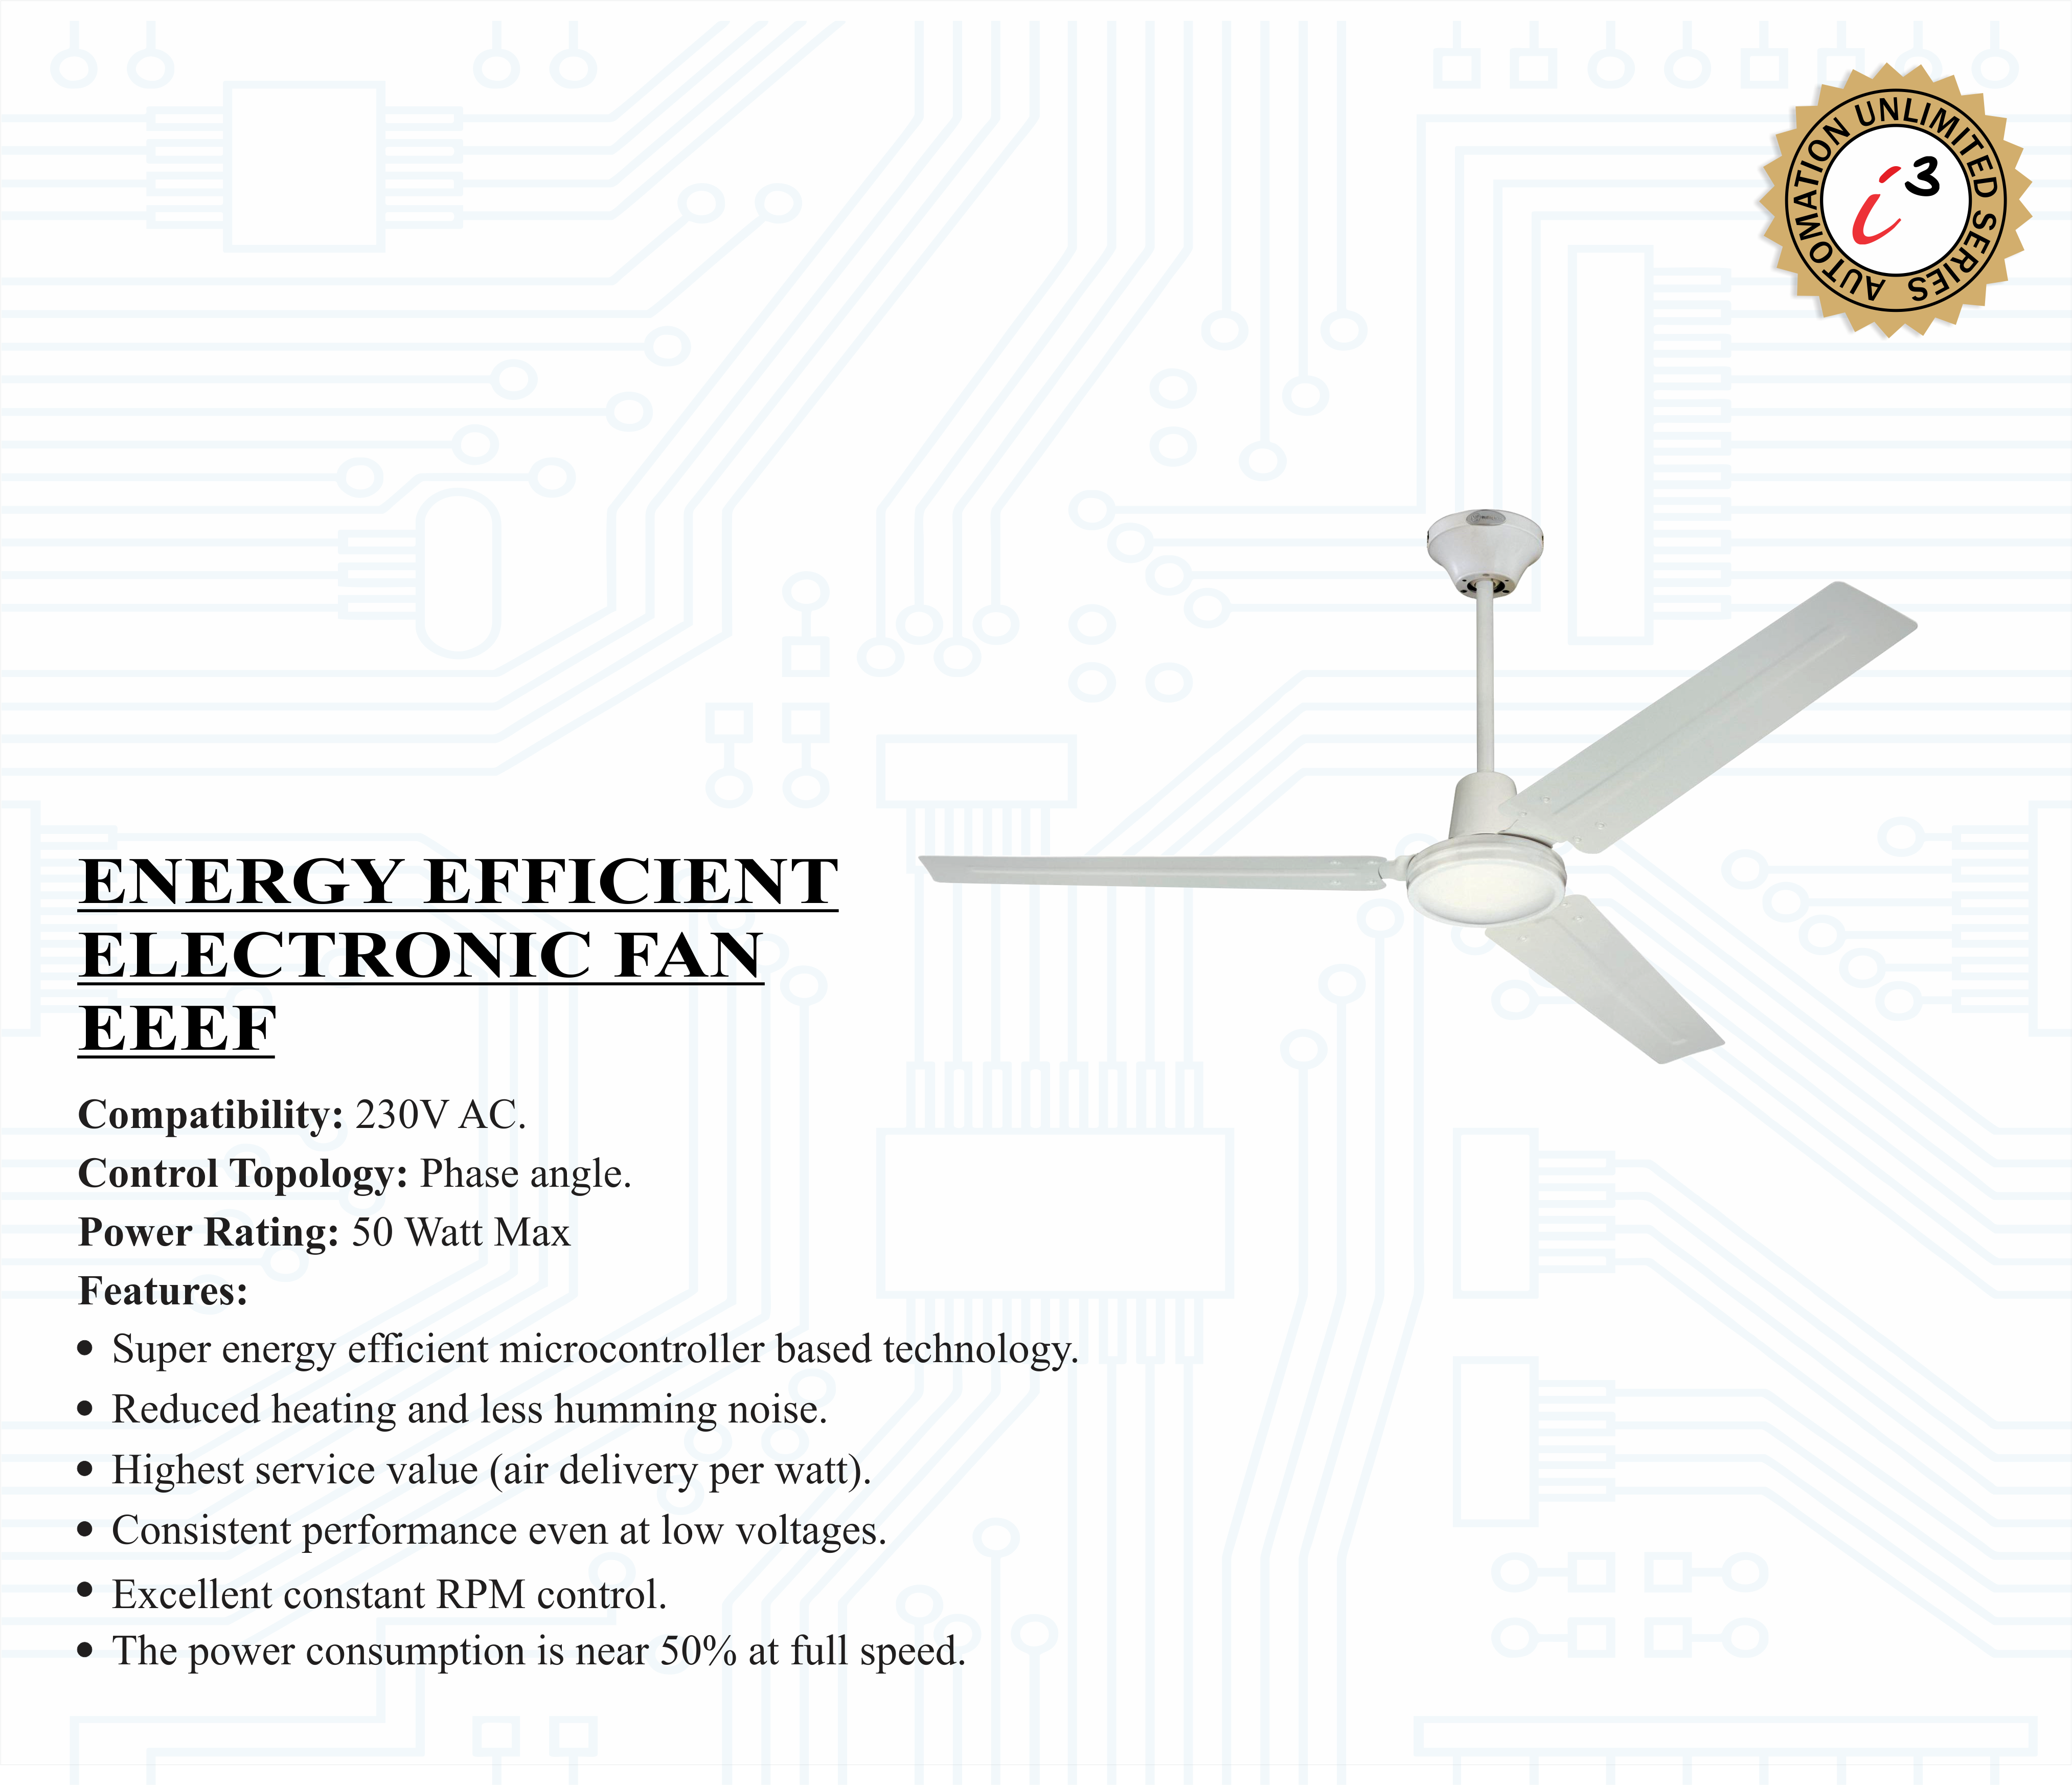 ENERGY EFFICIENT ELECTRONIC FAN EEEF